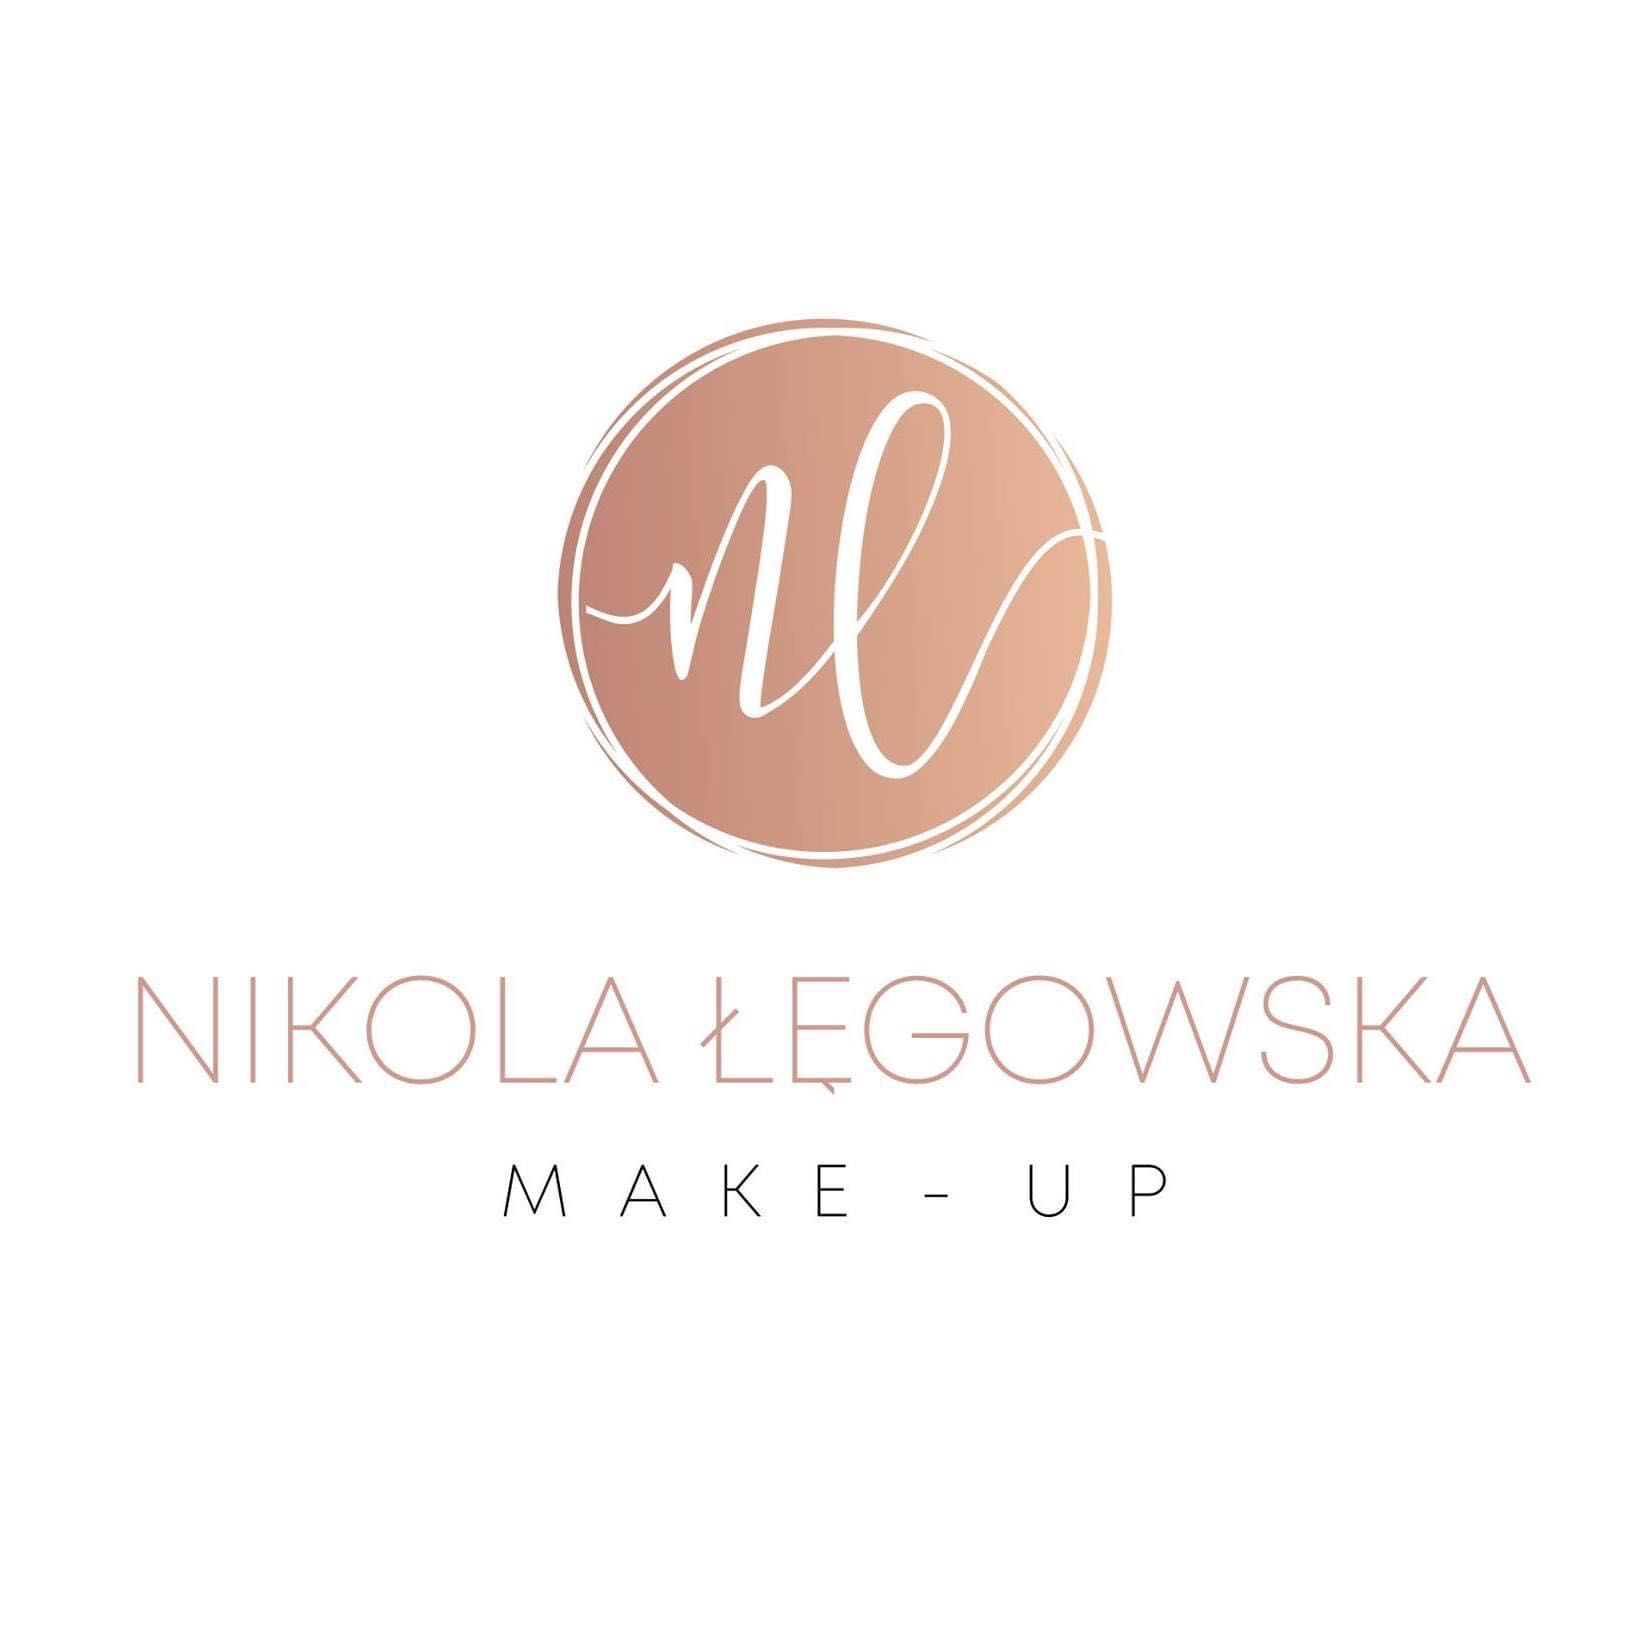 Nikola Łęgowska Make-Up, Pigwowa 7, 4, 87-100, Toruń